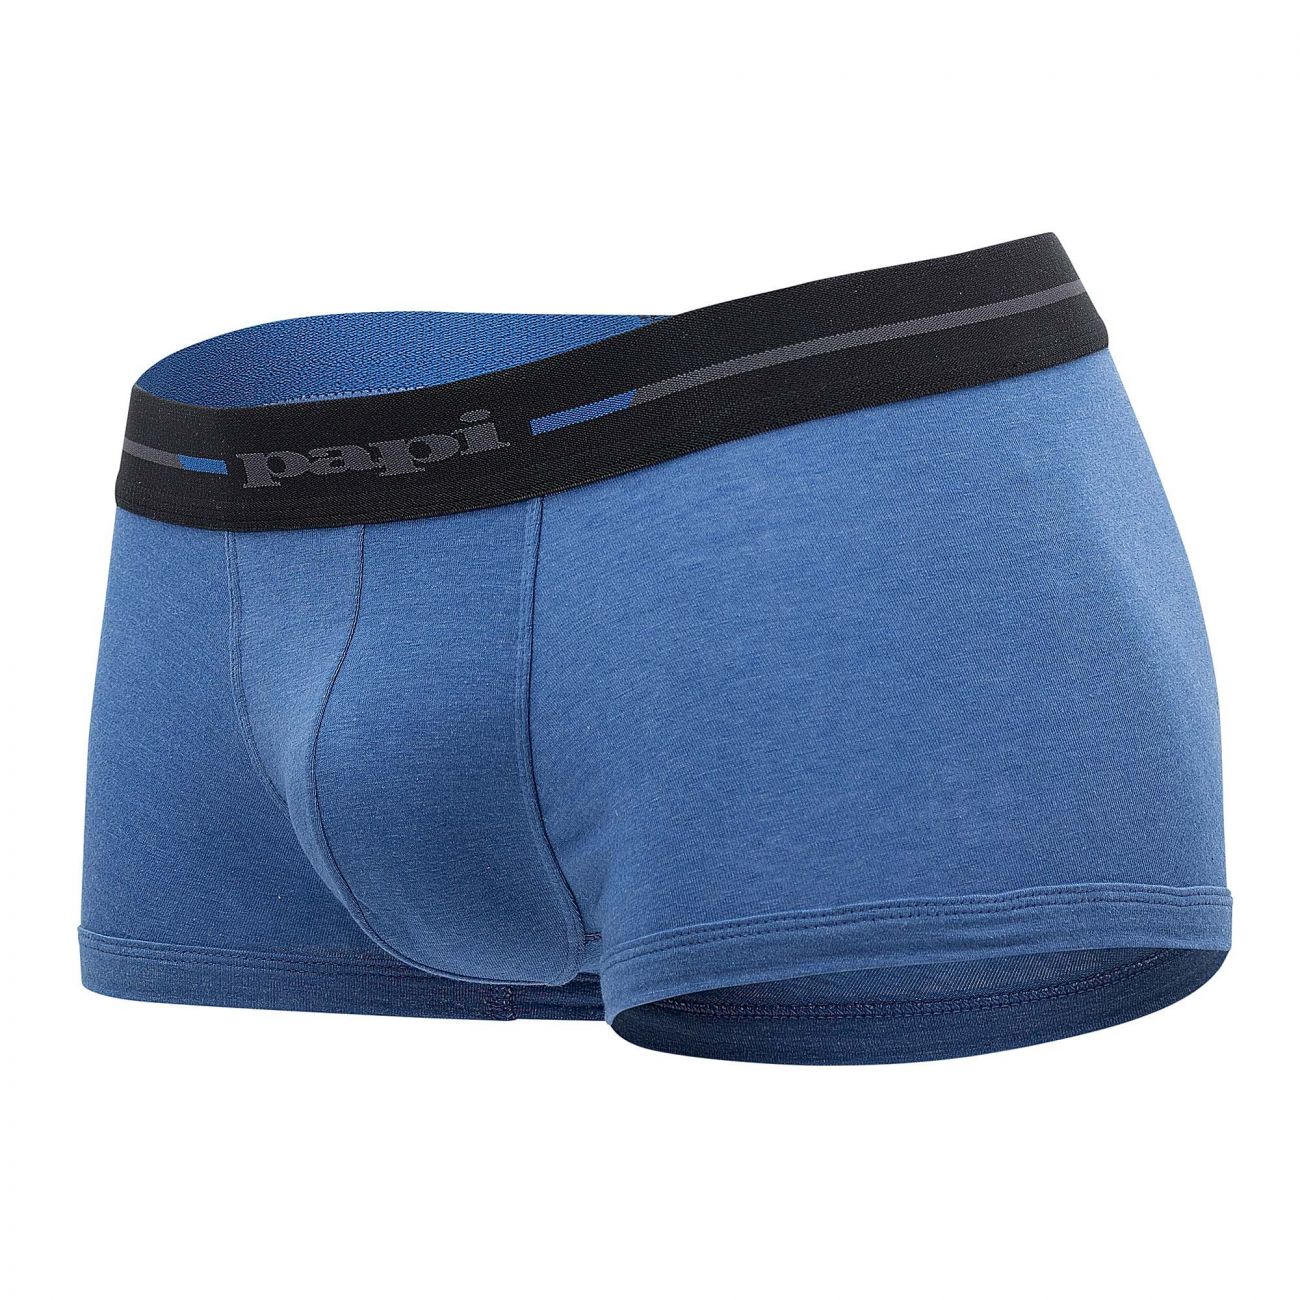 Papi Men's Fashion Underwear Boxer Briefs Trunks for Men | eBay